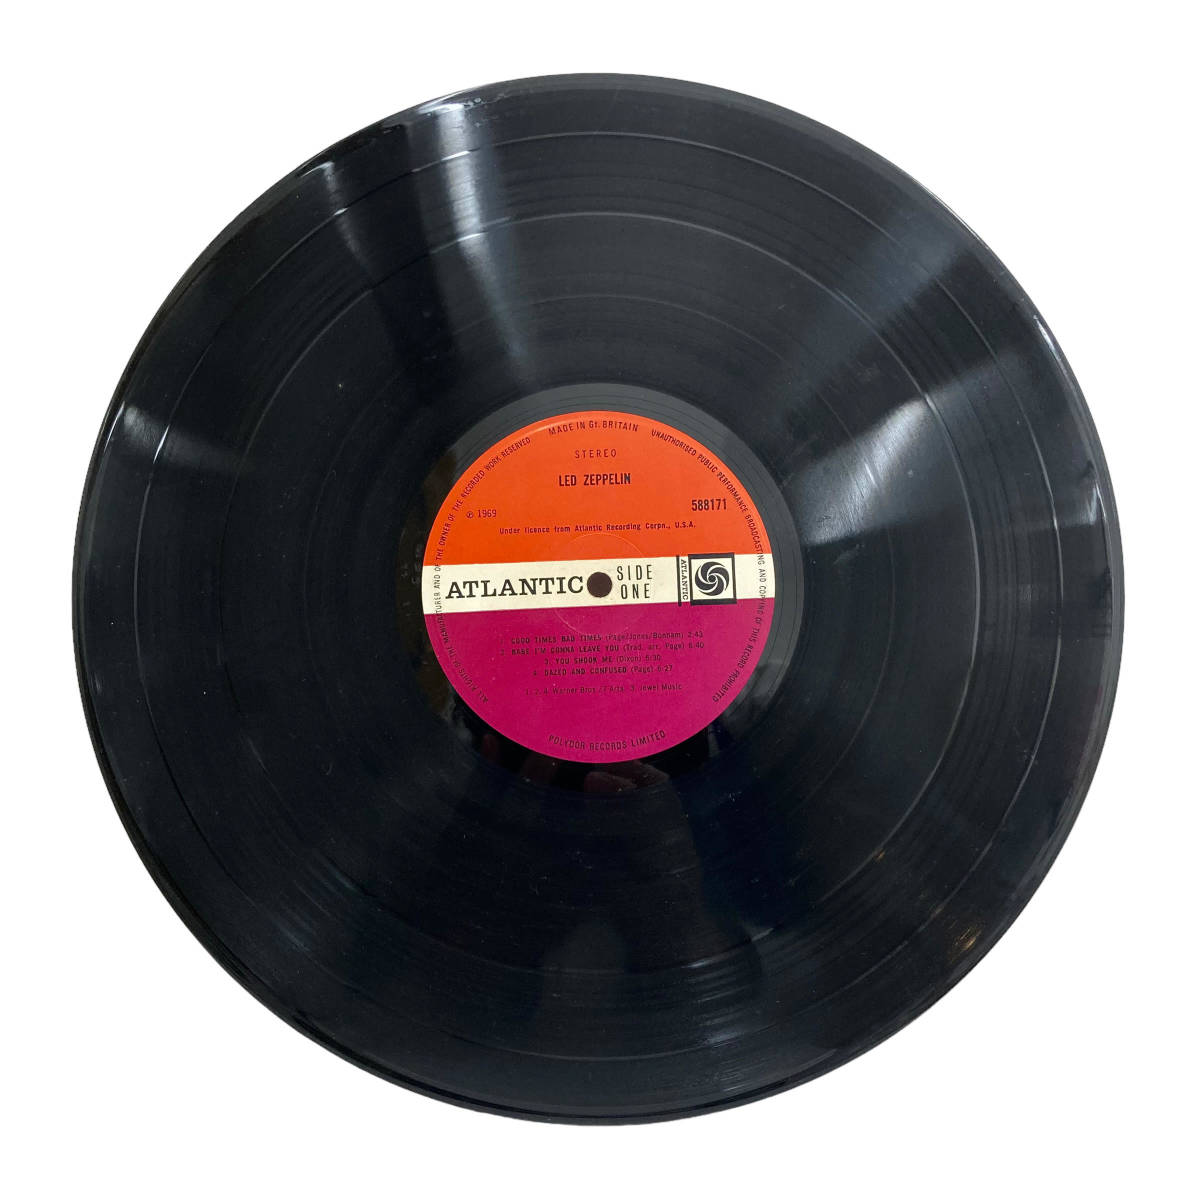 UK盤 Led Zeppelin UK '69 Atlantic 588171 Warner Bros./7 Arts . Jewel Music' in two lines (labels) レコード LP オリジナル_画像4